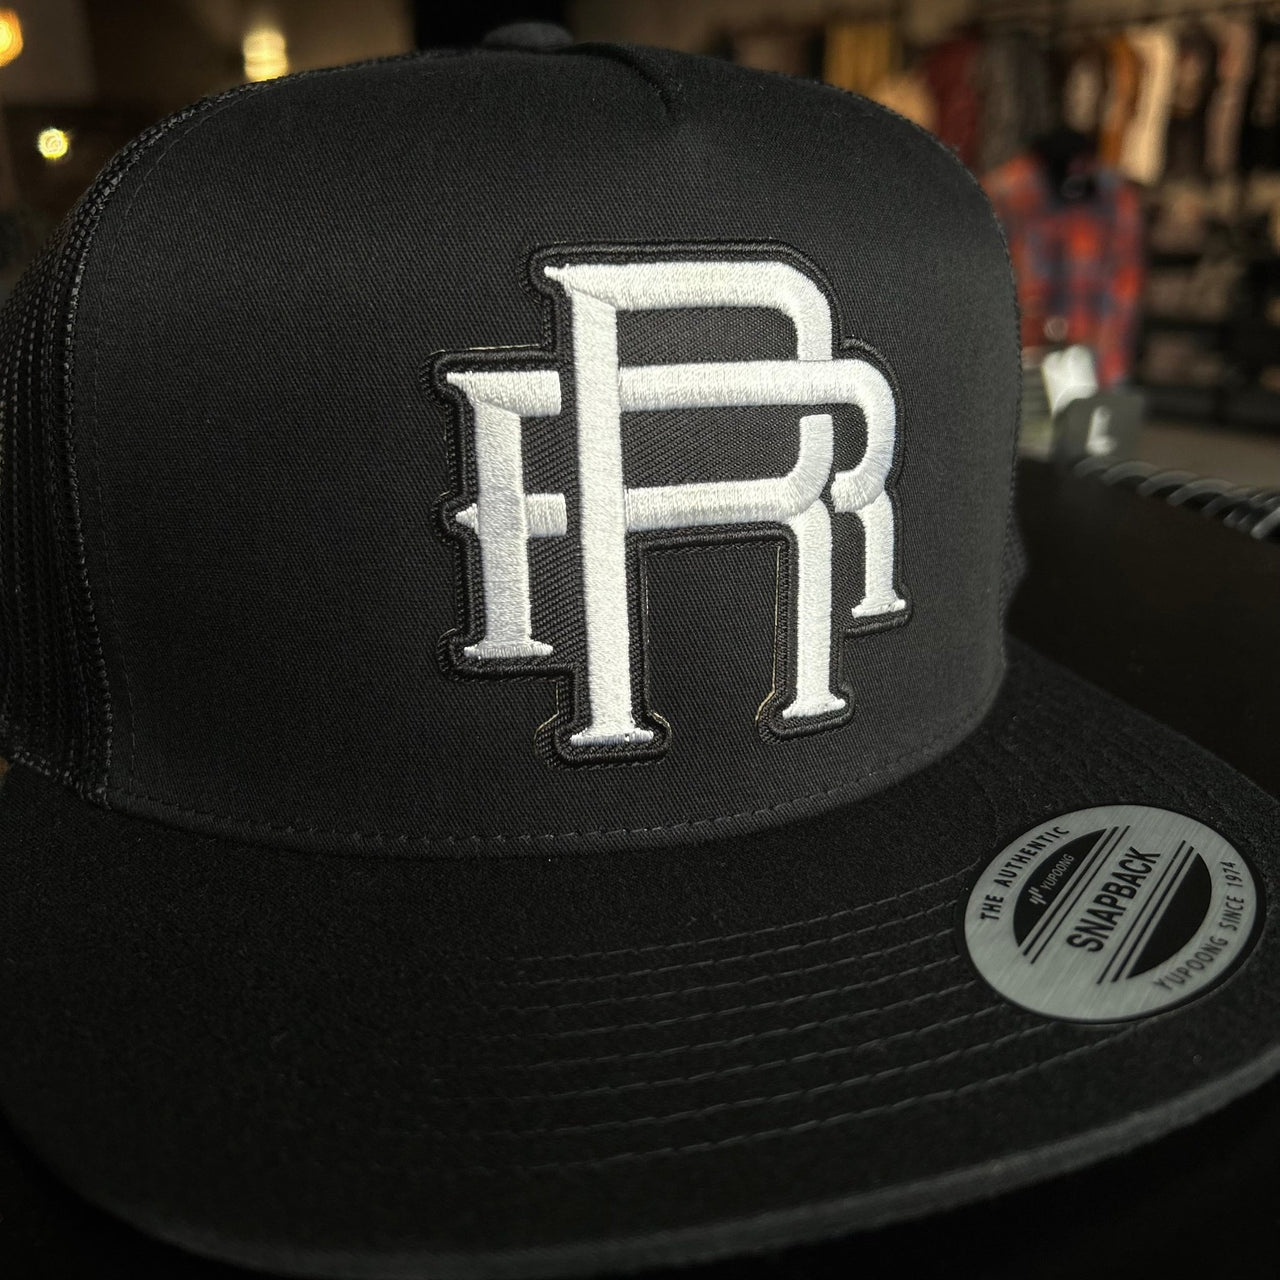 RR Monogram - Snapback Hat Black